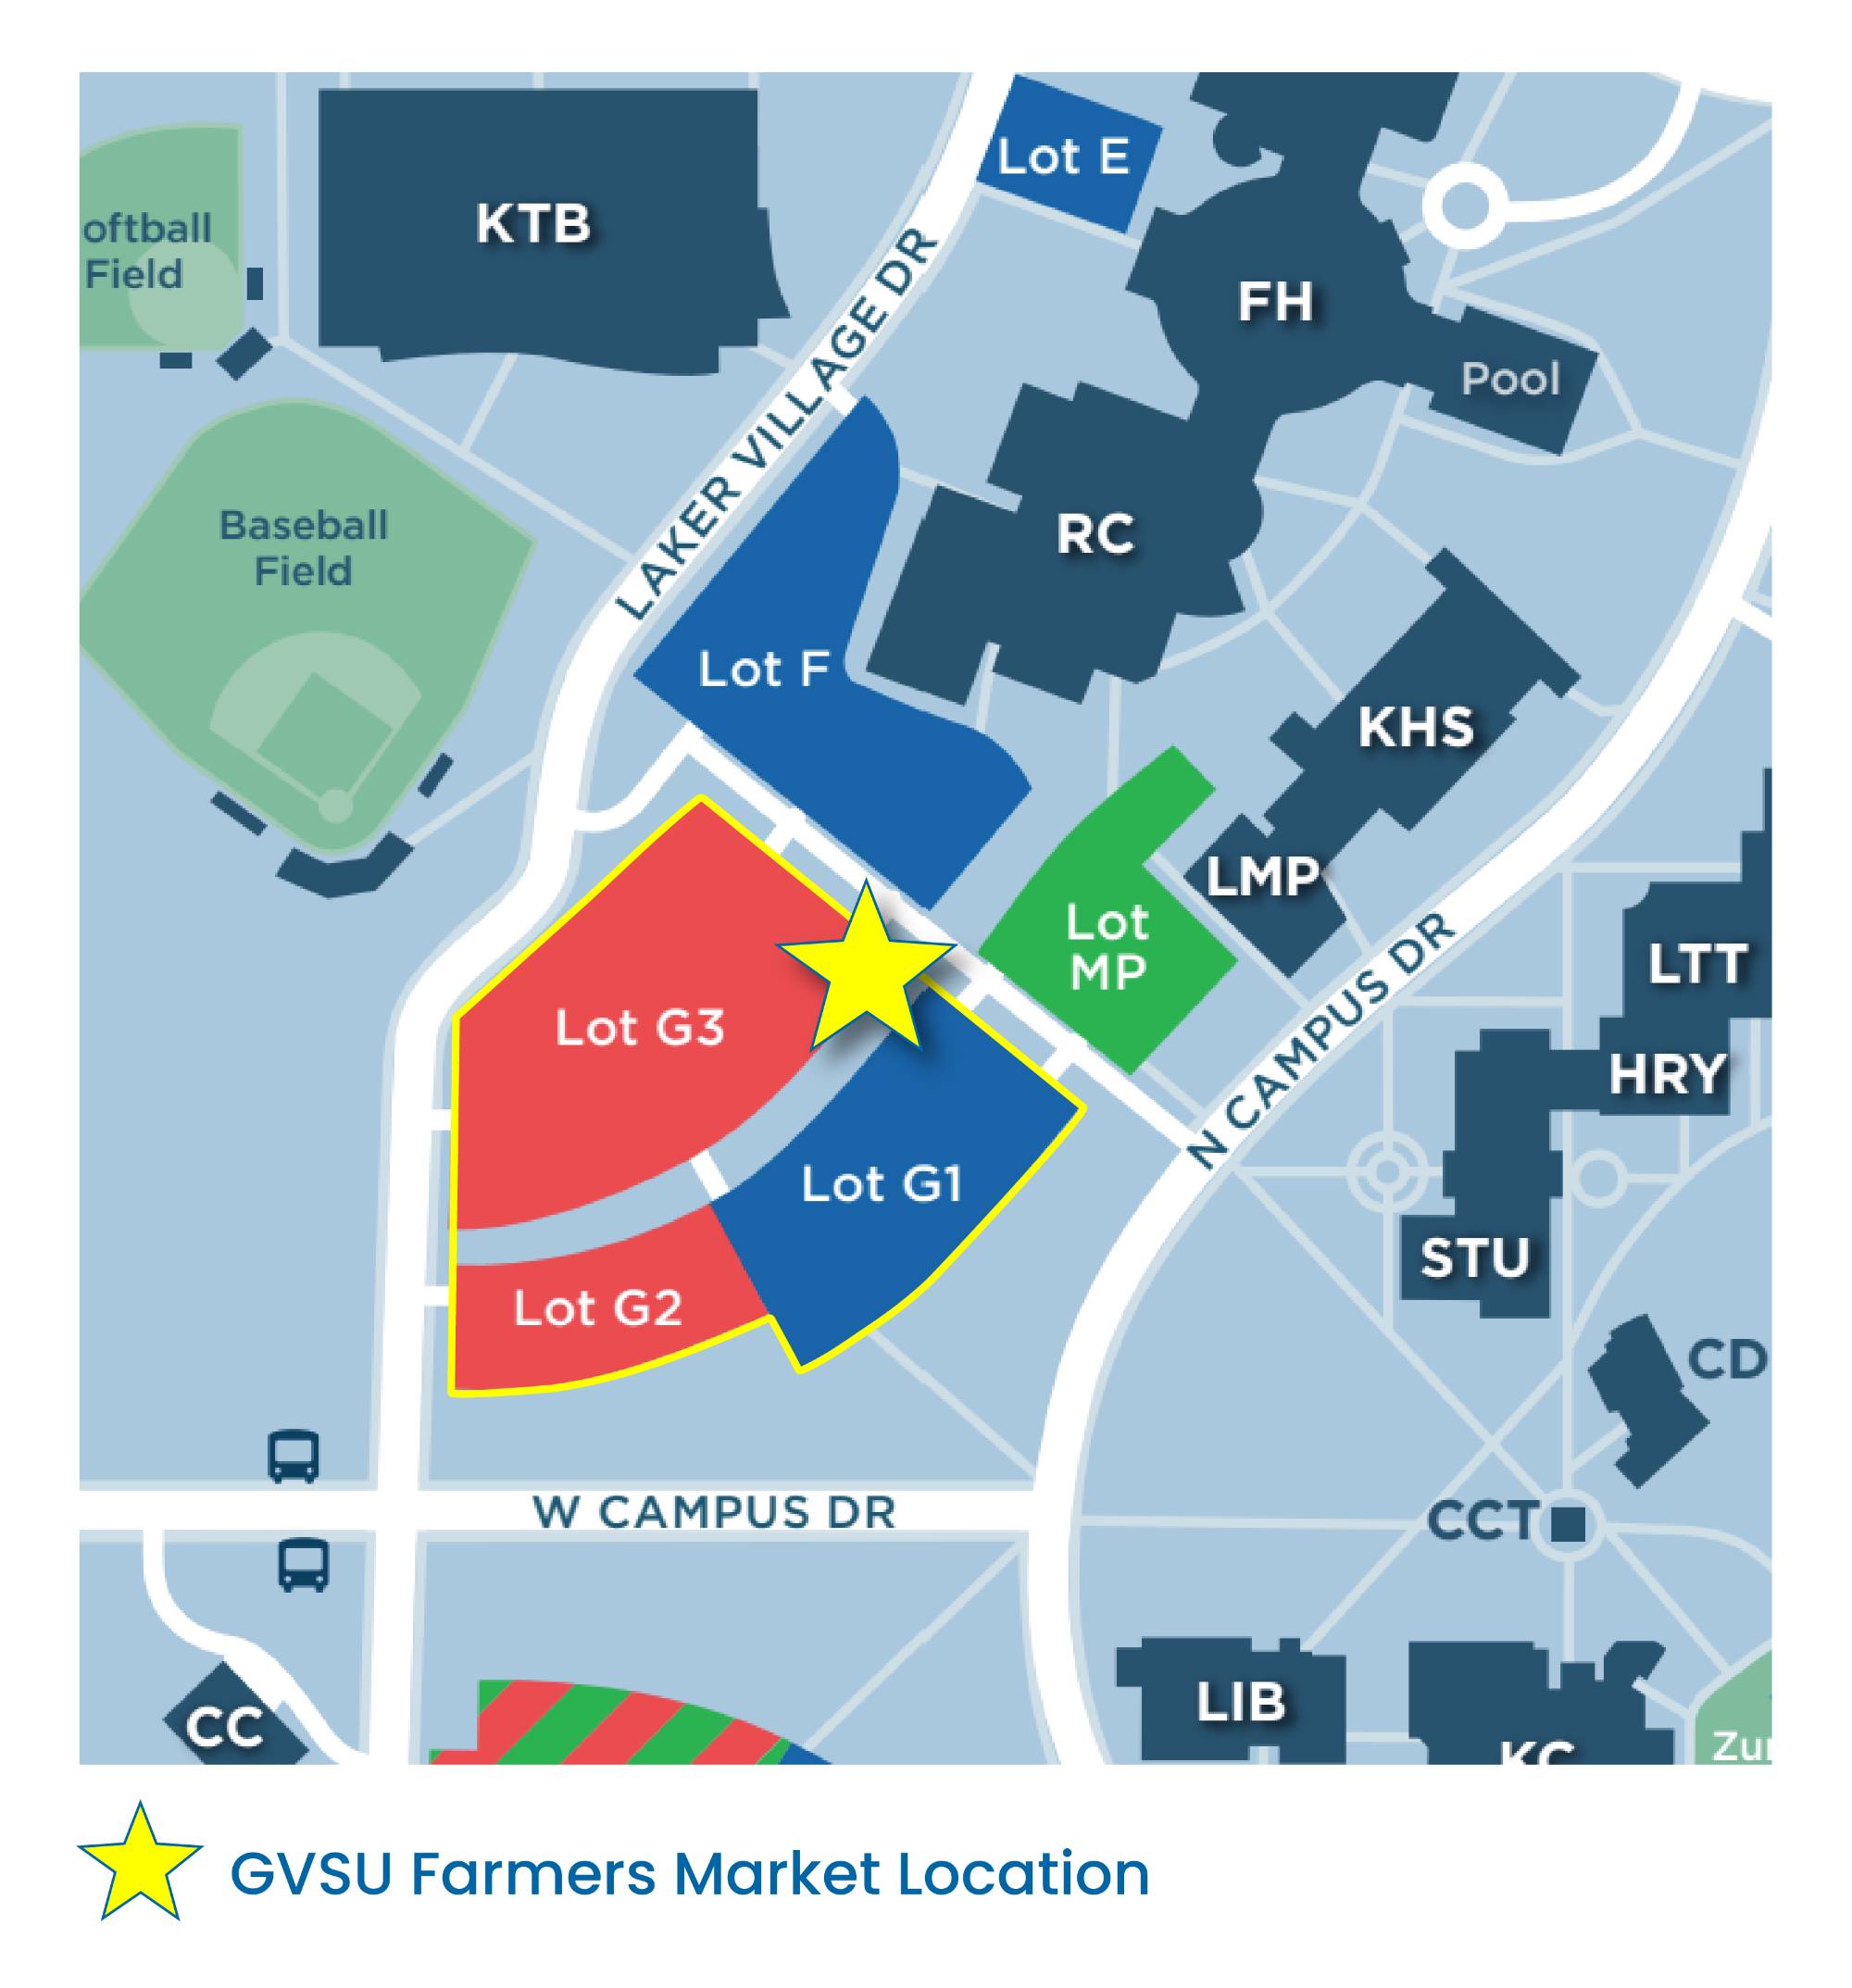 GVSU Farmers Market Location map, showing a star on parking lot G3